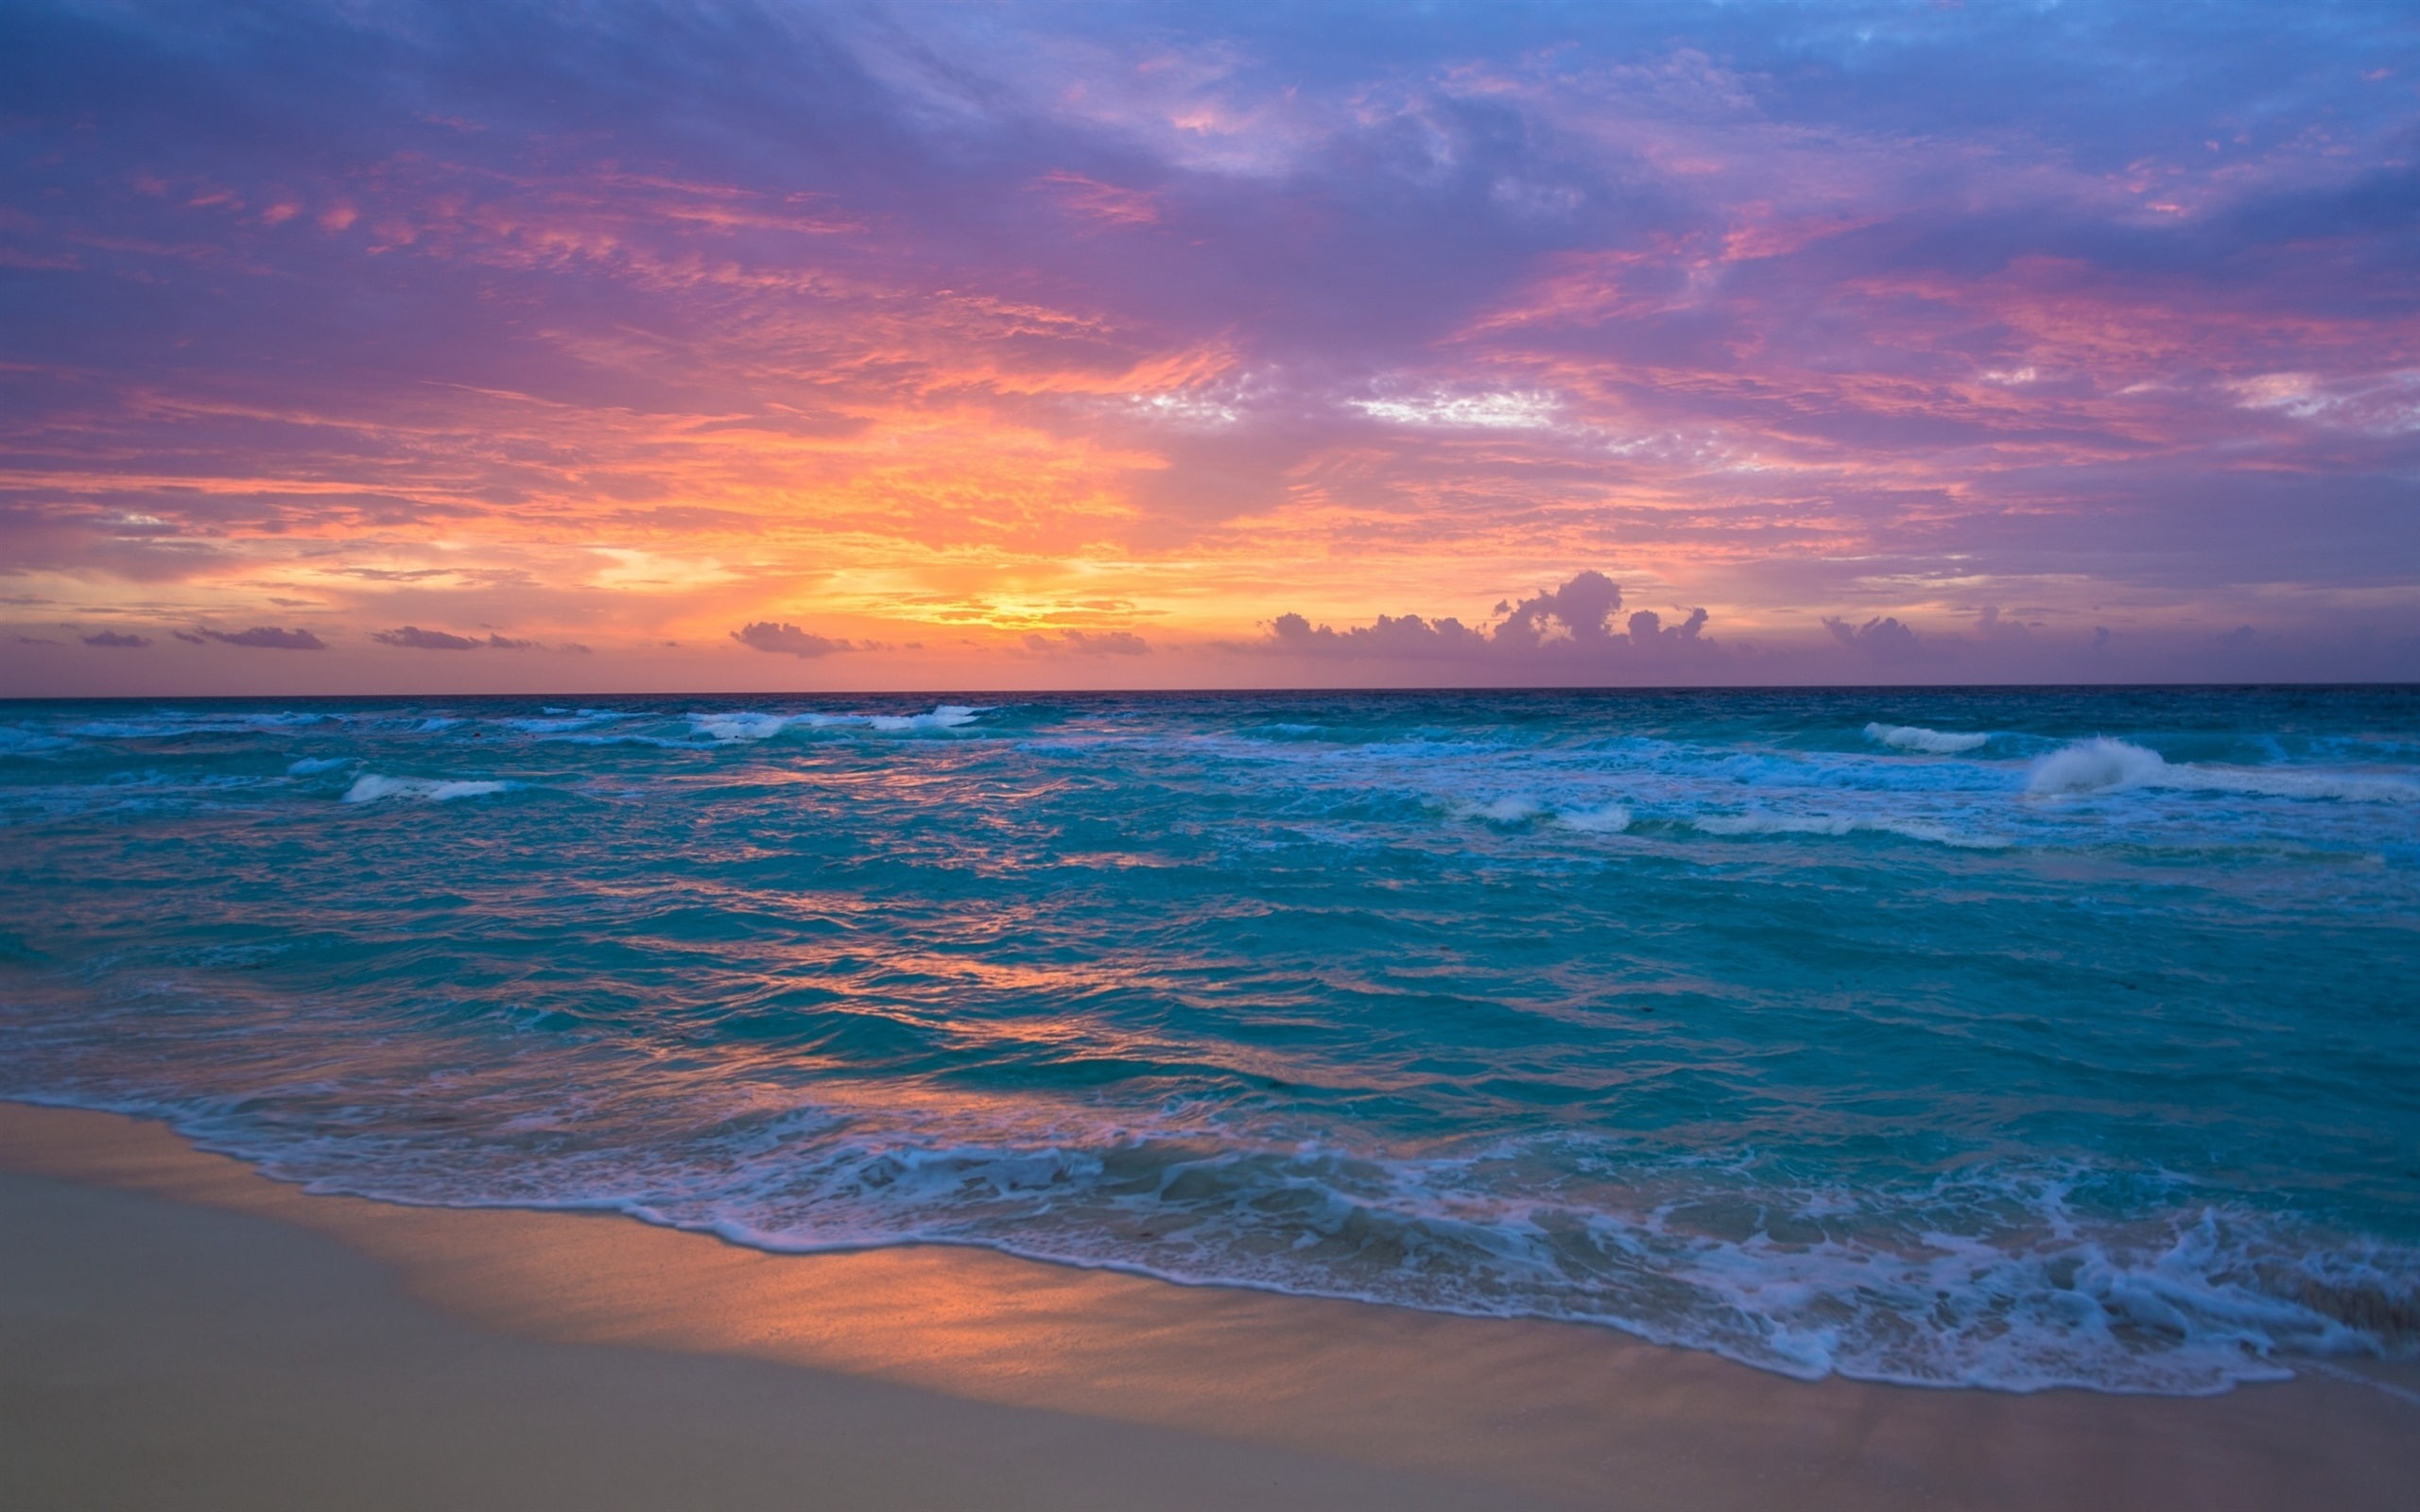 Sea, waves, beach, sunset, red sky